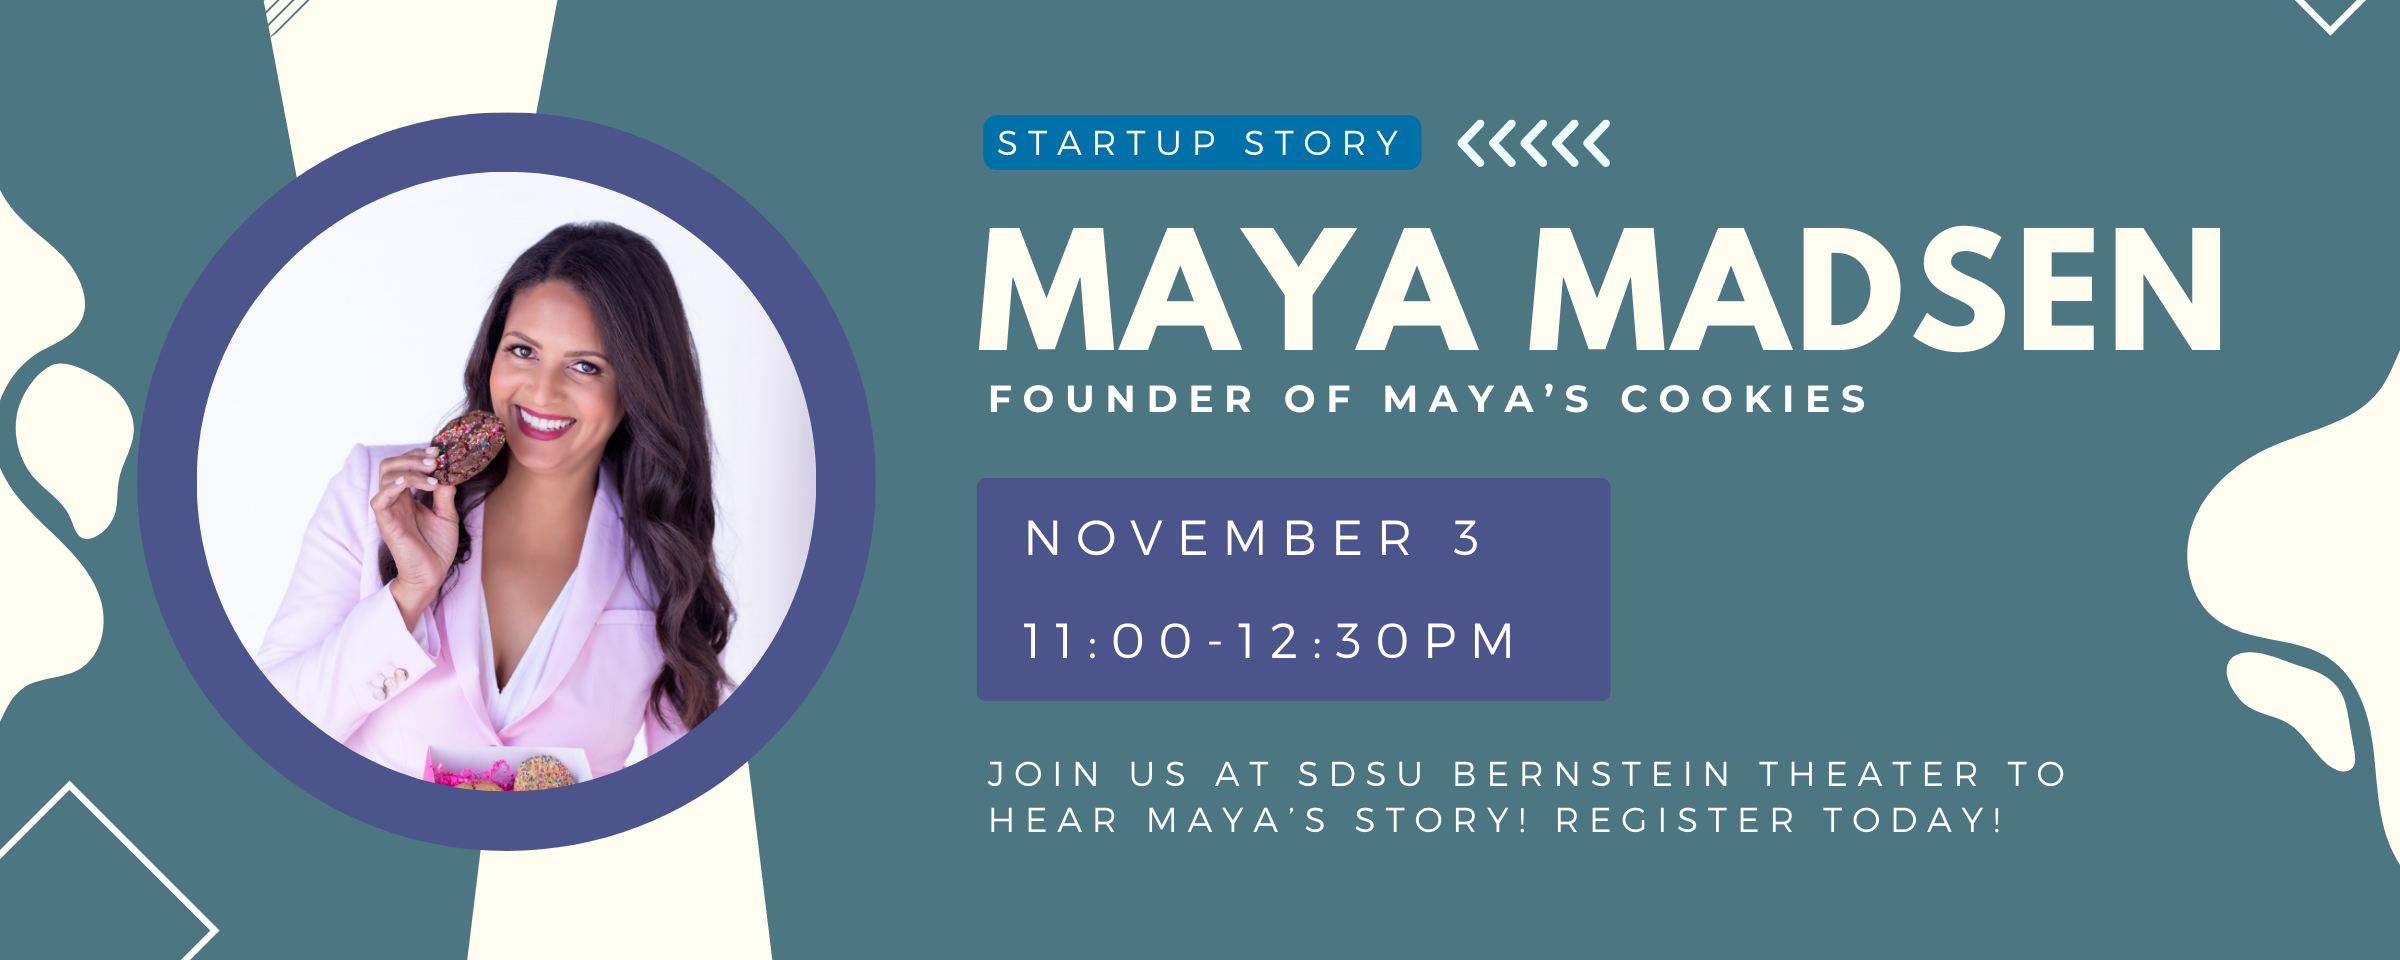 Startup Story: Maya Madsen